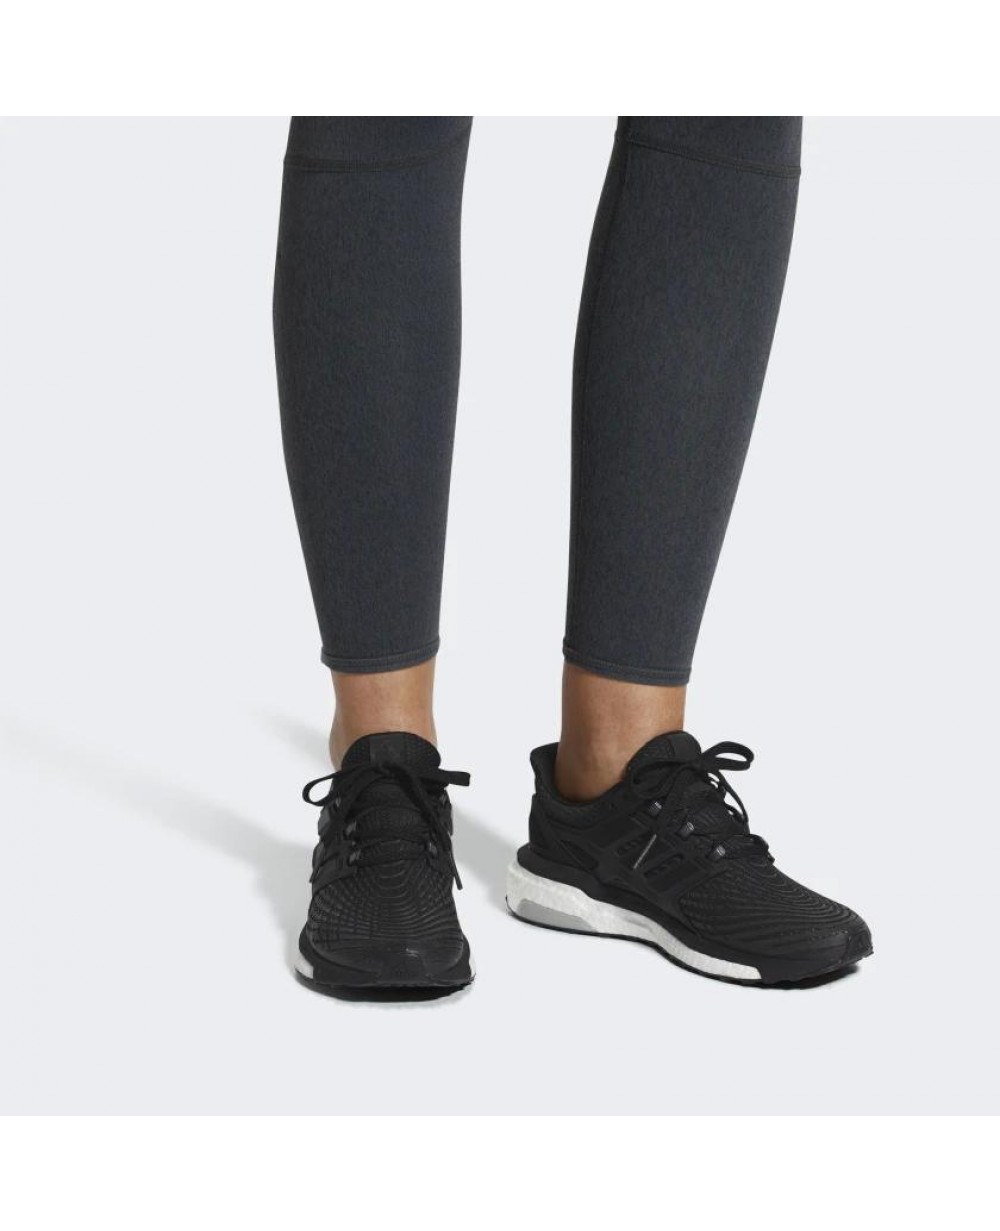 Adidas Energy Boost Running Shoes For Women - CG3972 - Women